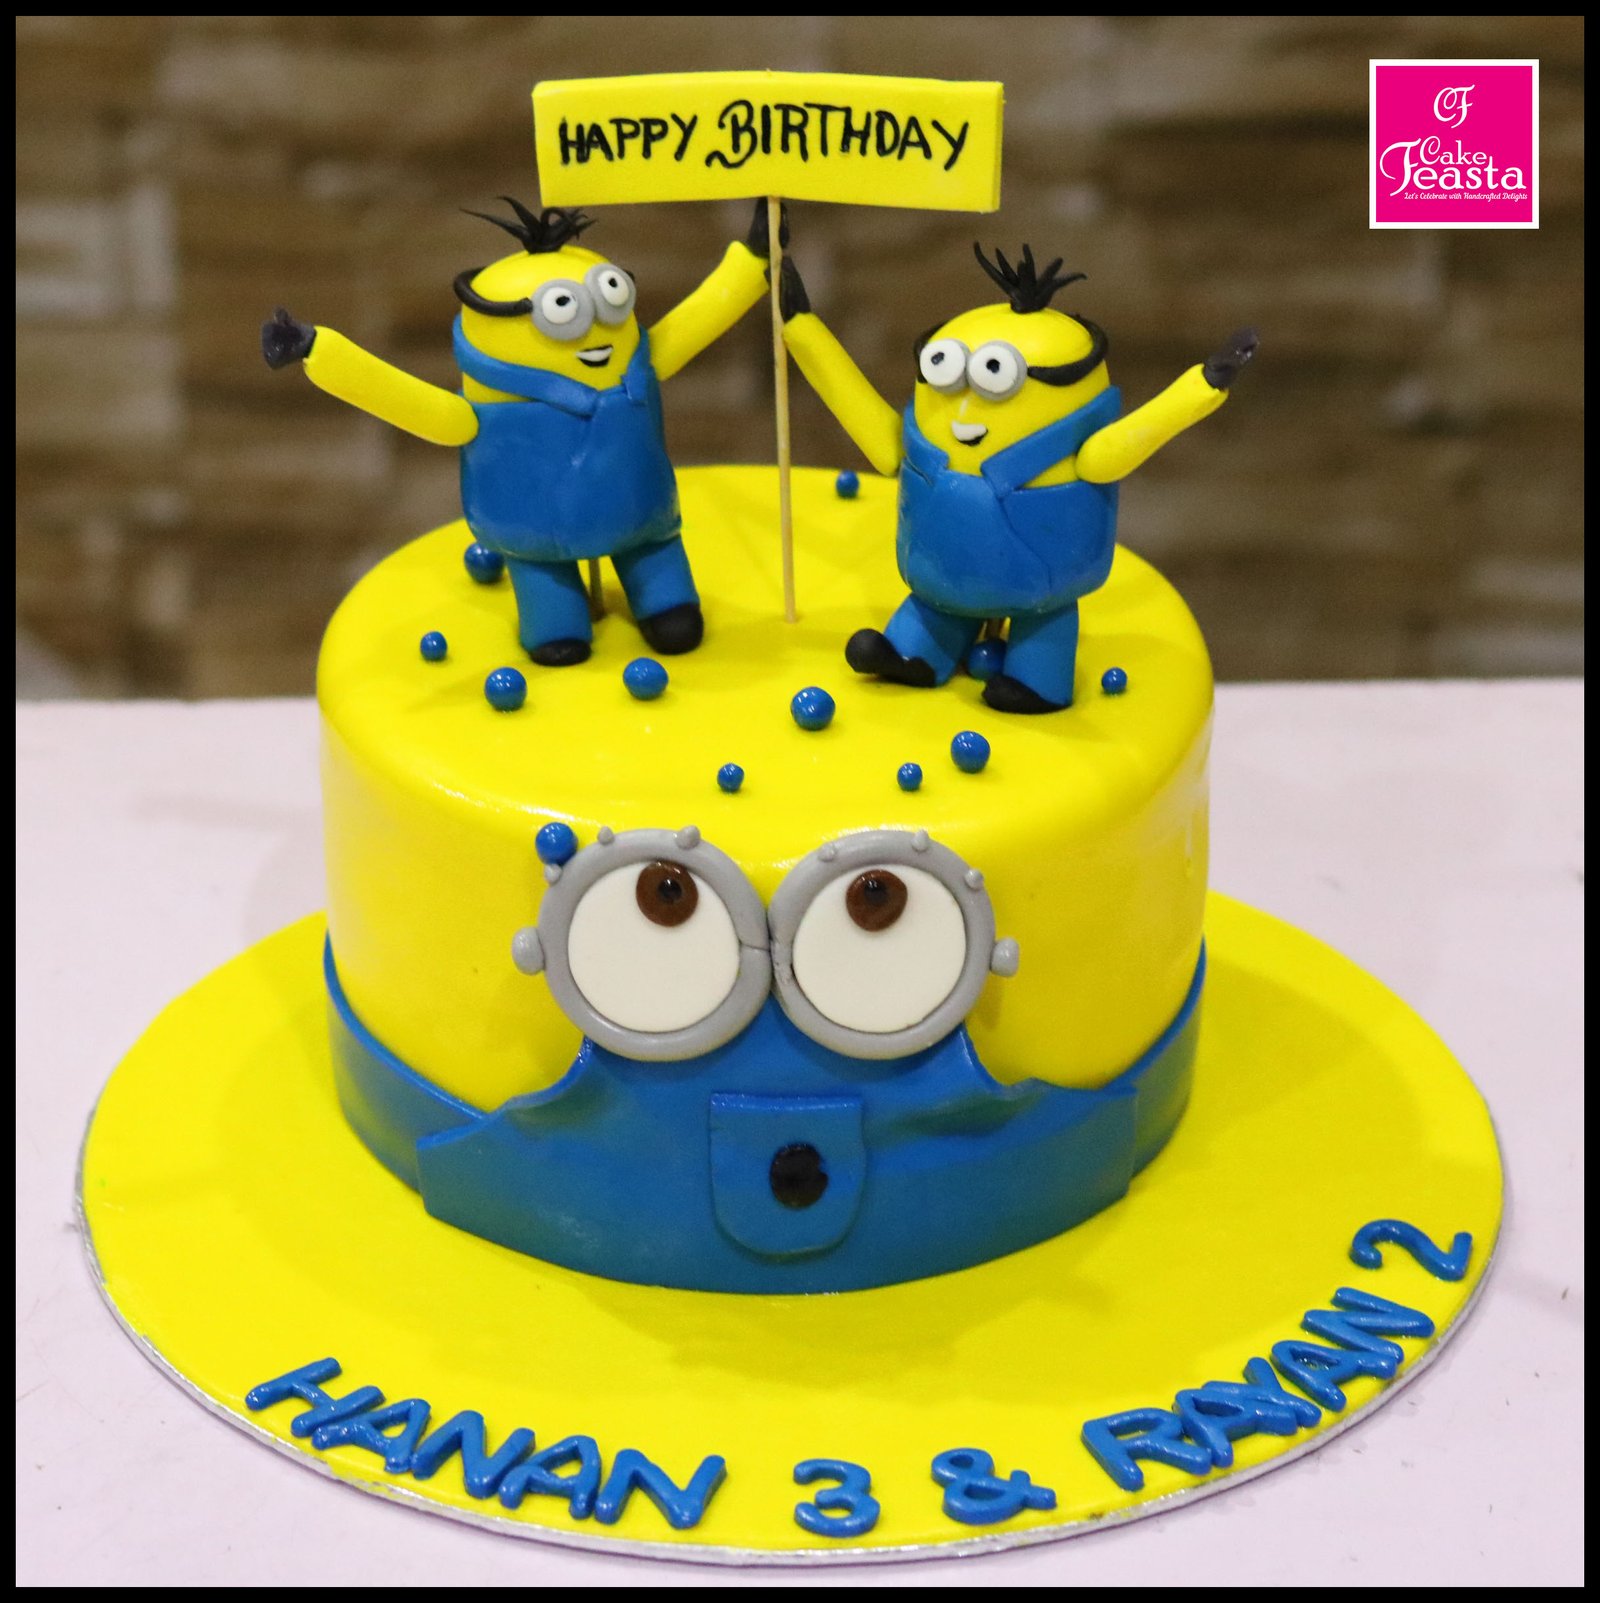 Minnions Kids Birthday Cake - Lahore Cakes - Cake Feasta